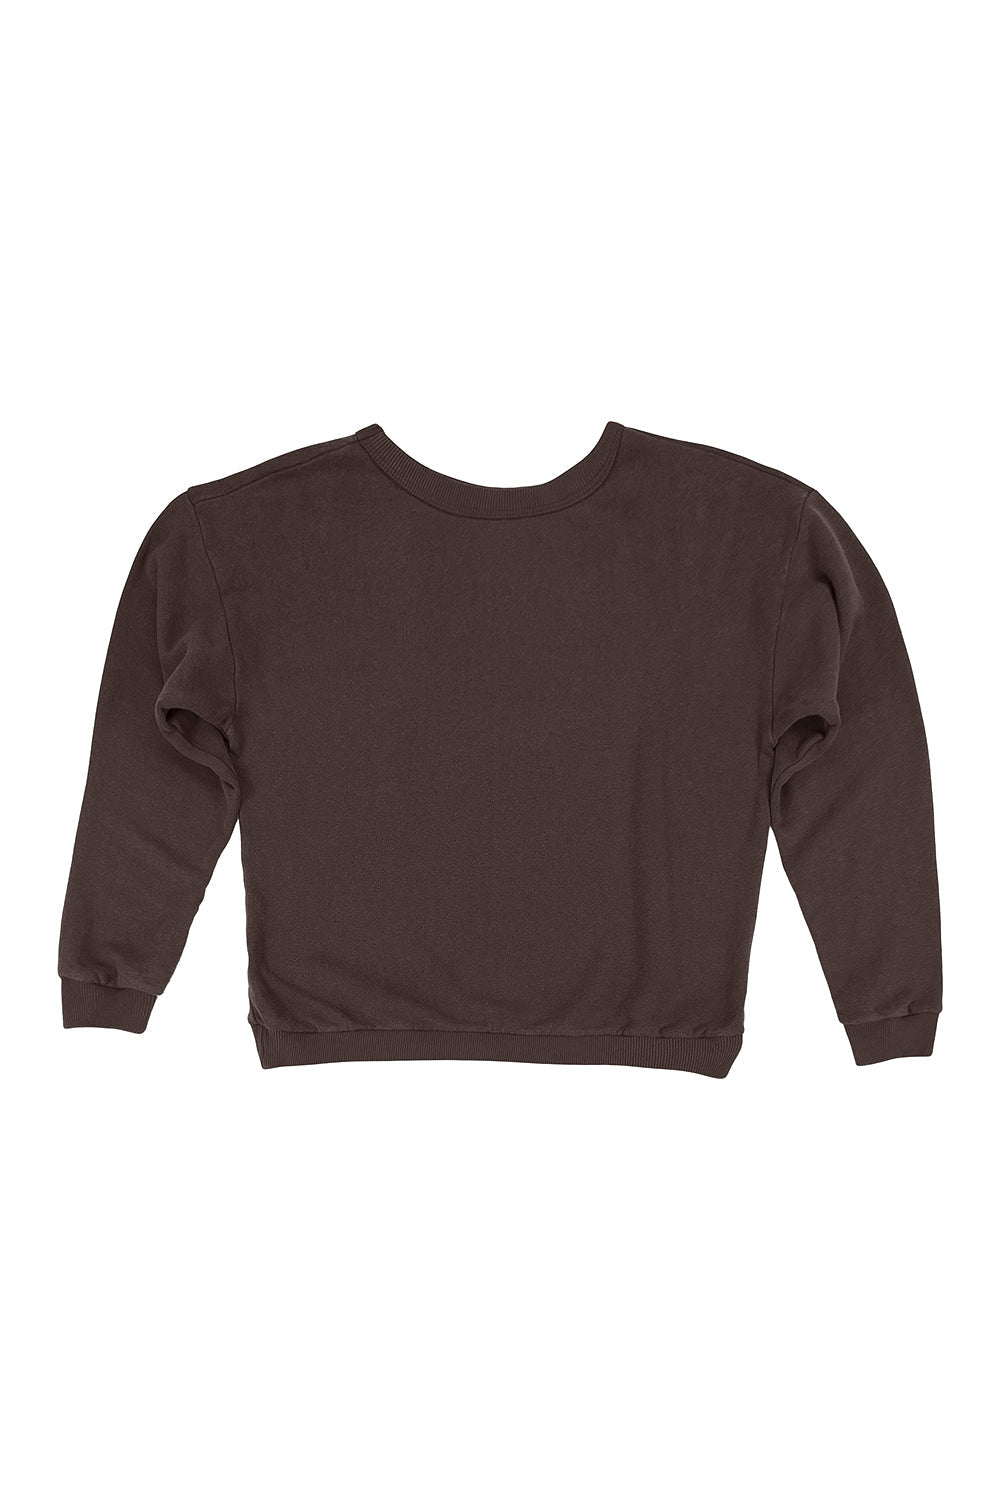 Coffee Bean Crux Cropped Sweatshirt